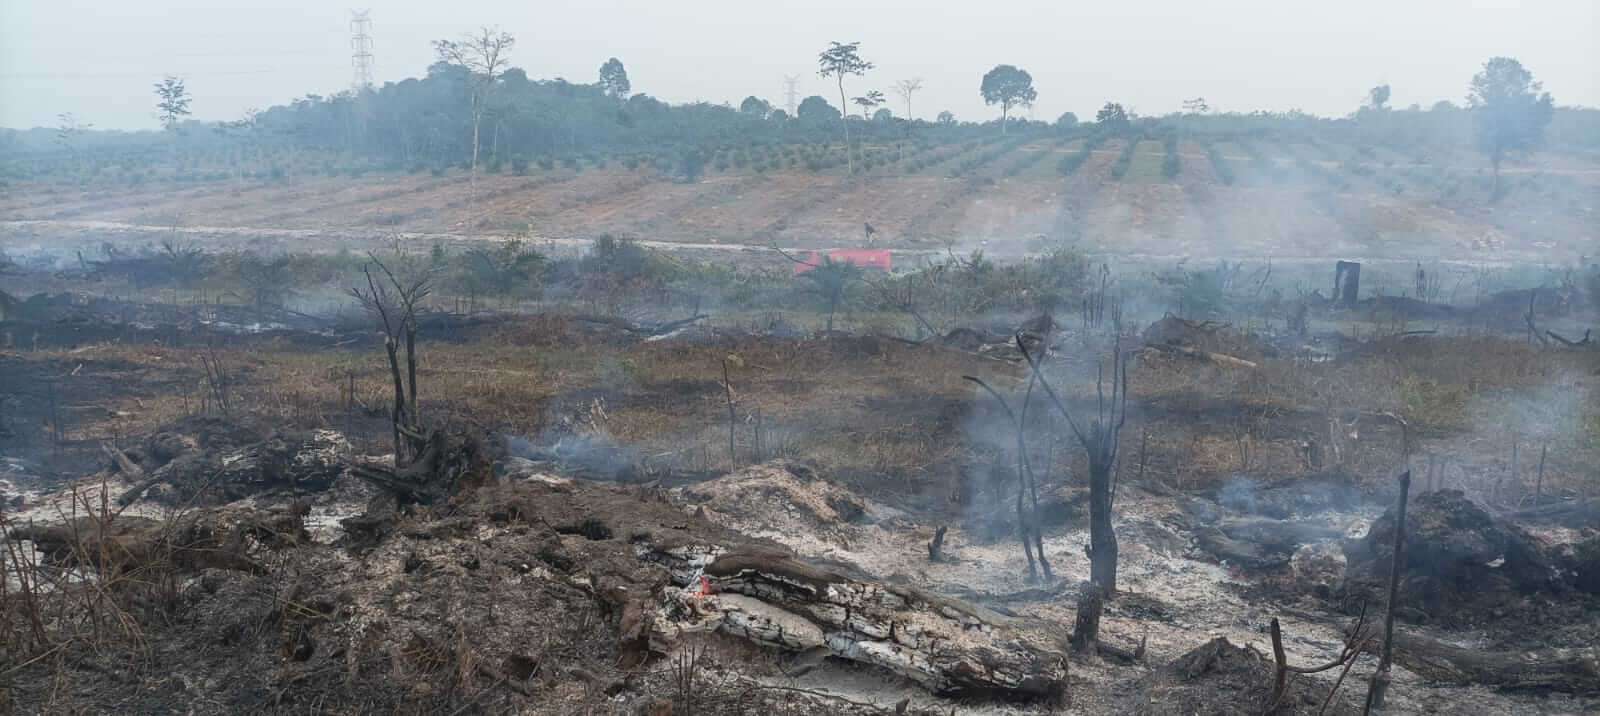 GAWAT.!! Sudah 36 Hektar Lebih Lahan yang Terbakar di Muaro Jambi